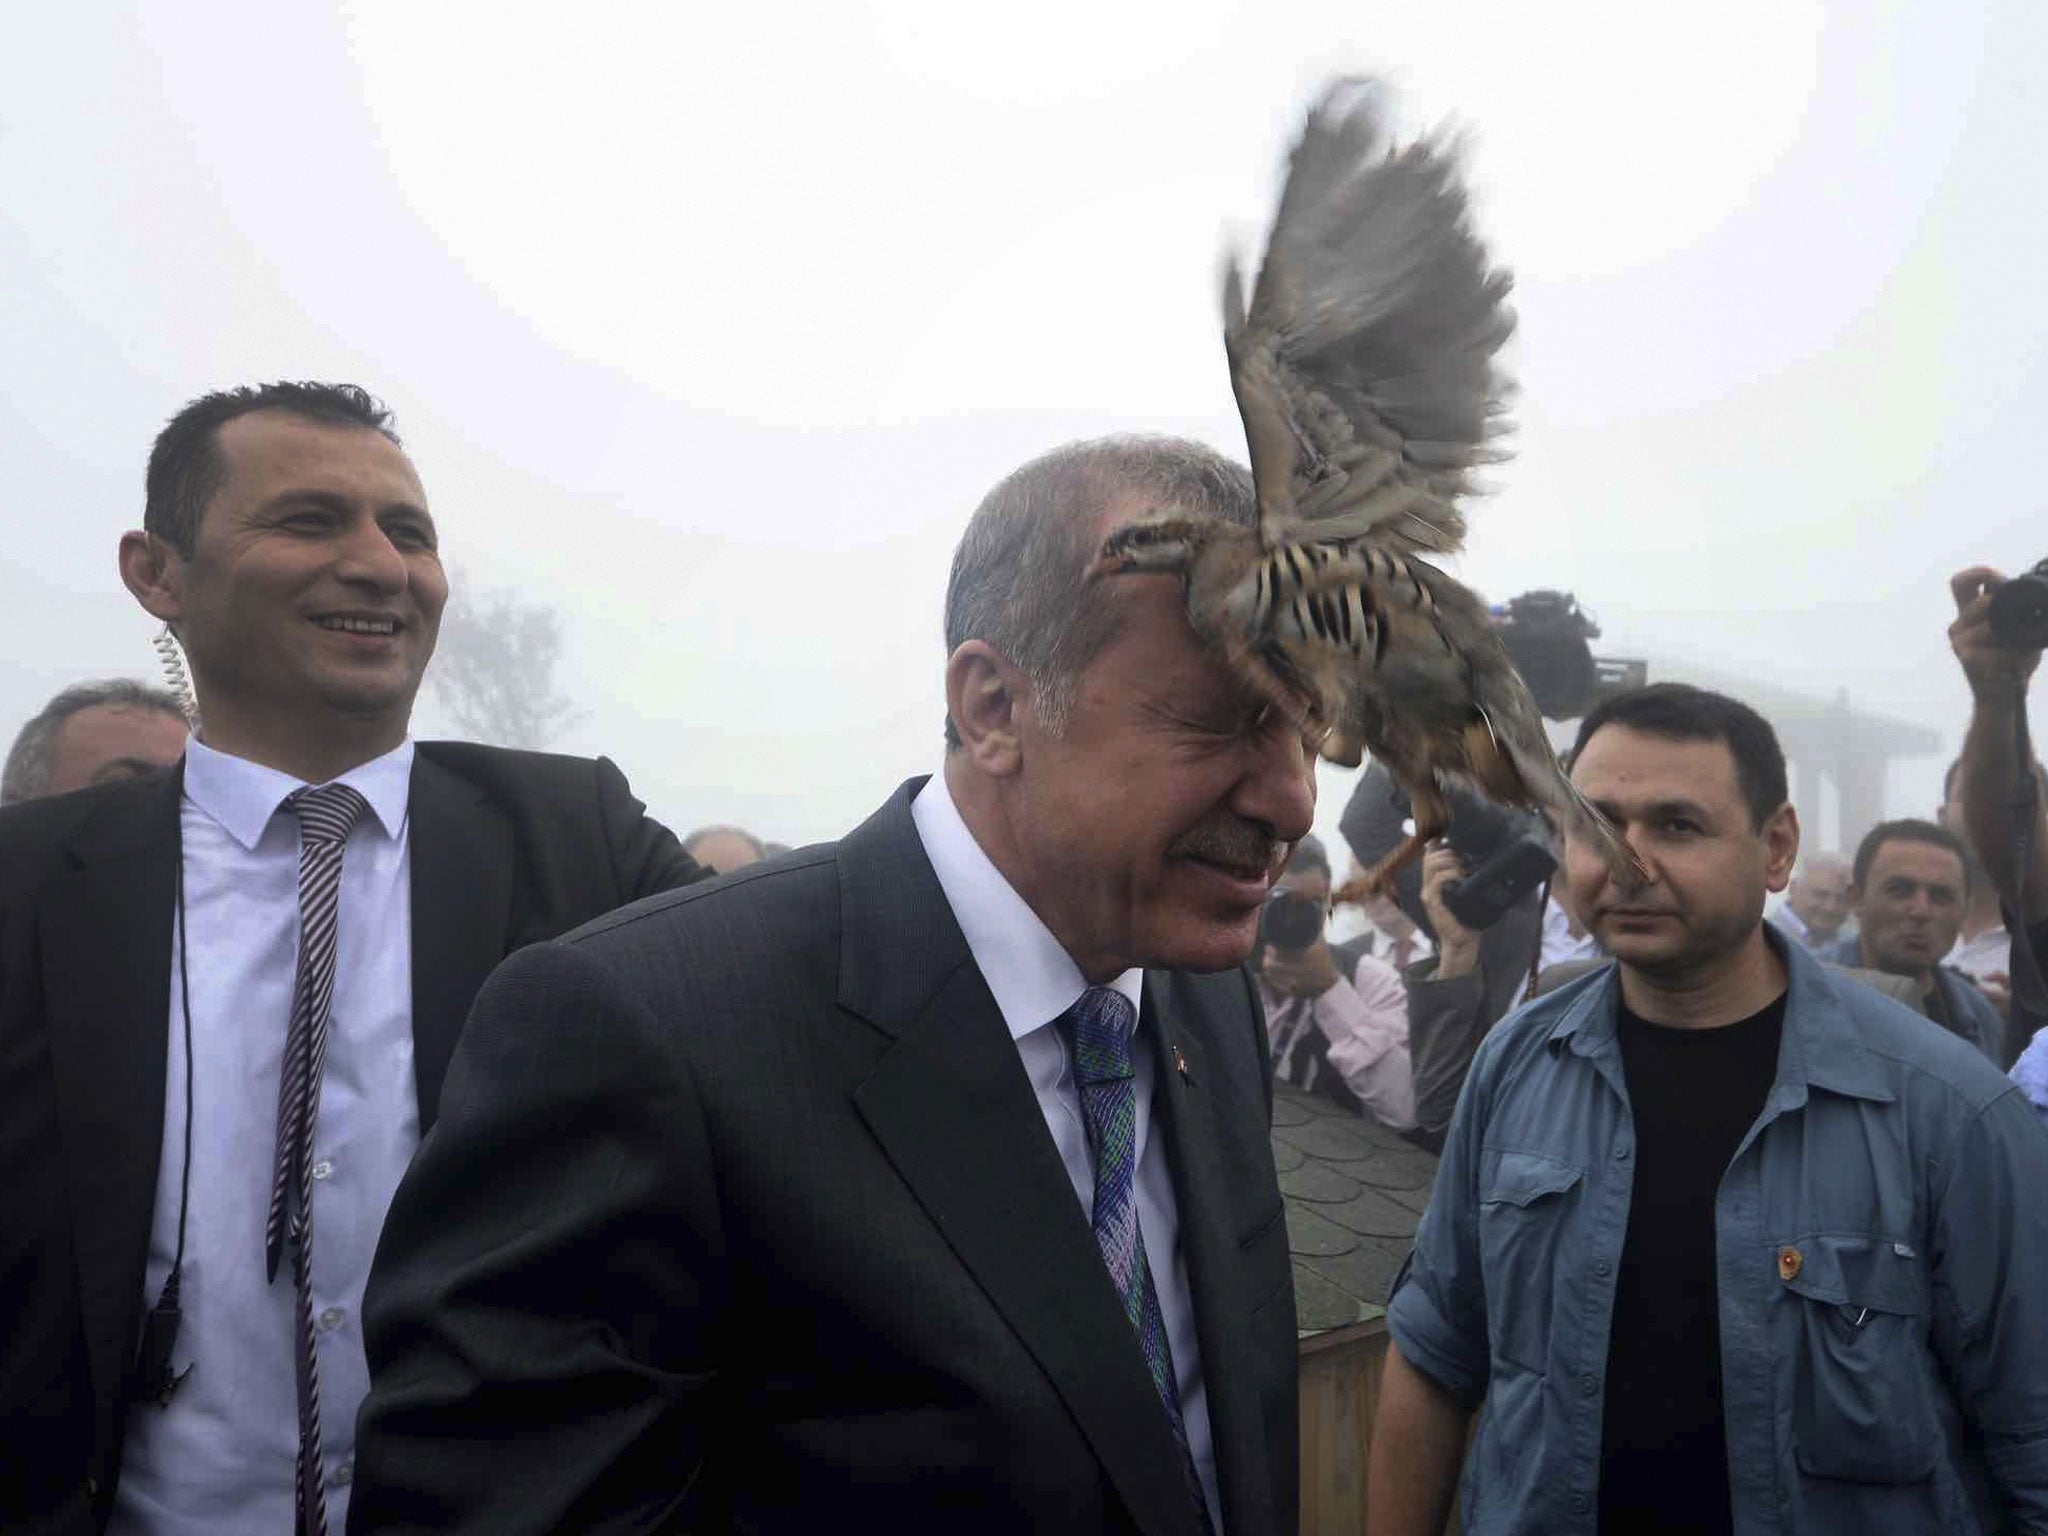 President Erdogan had a close encounter with a bird on Friday